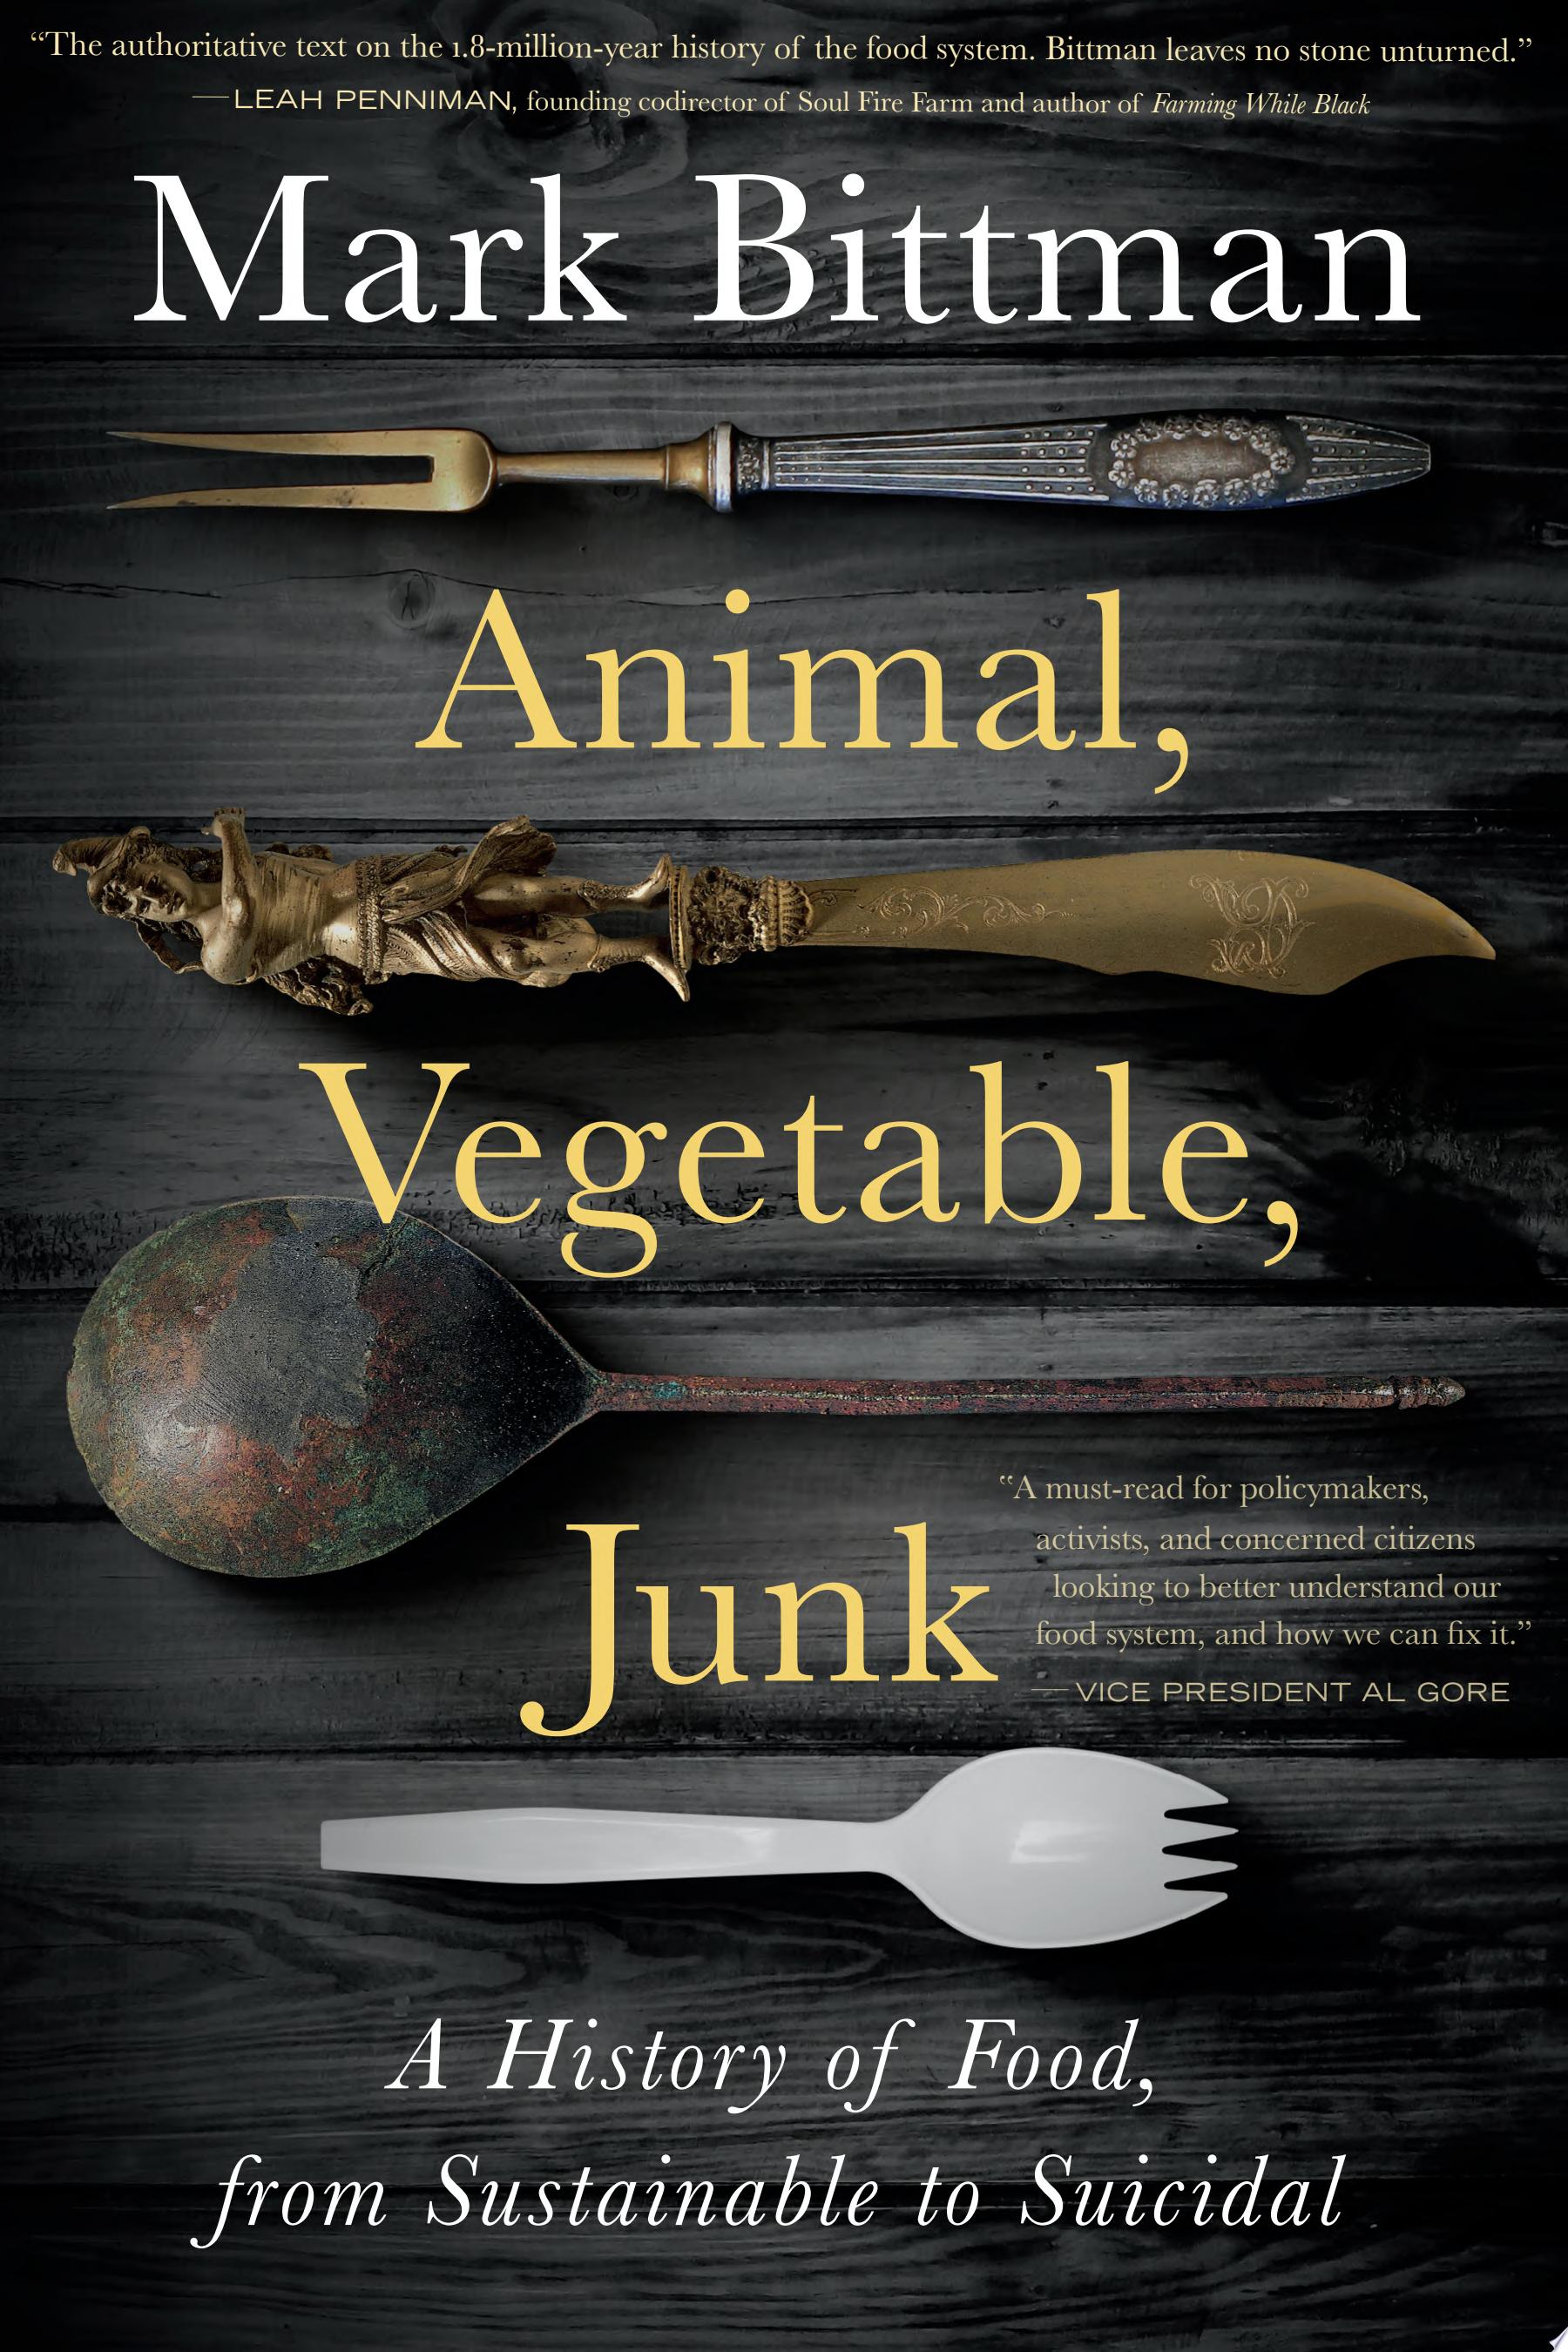 Image for "Animal, Vegetable, Junk"